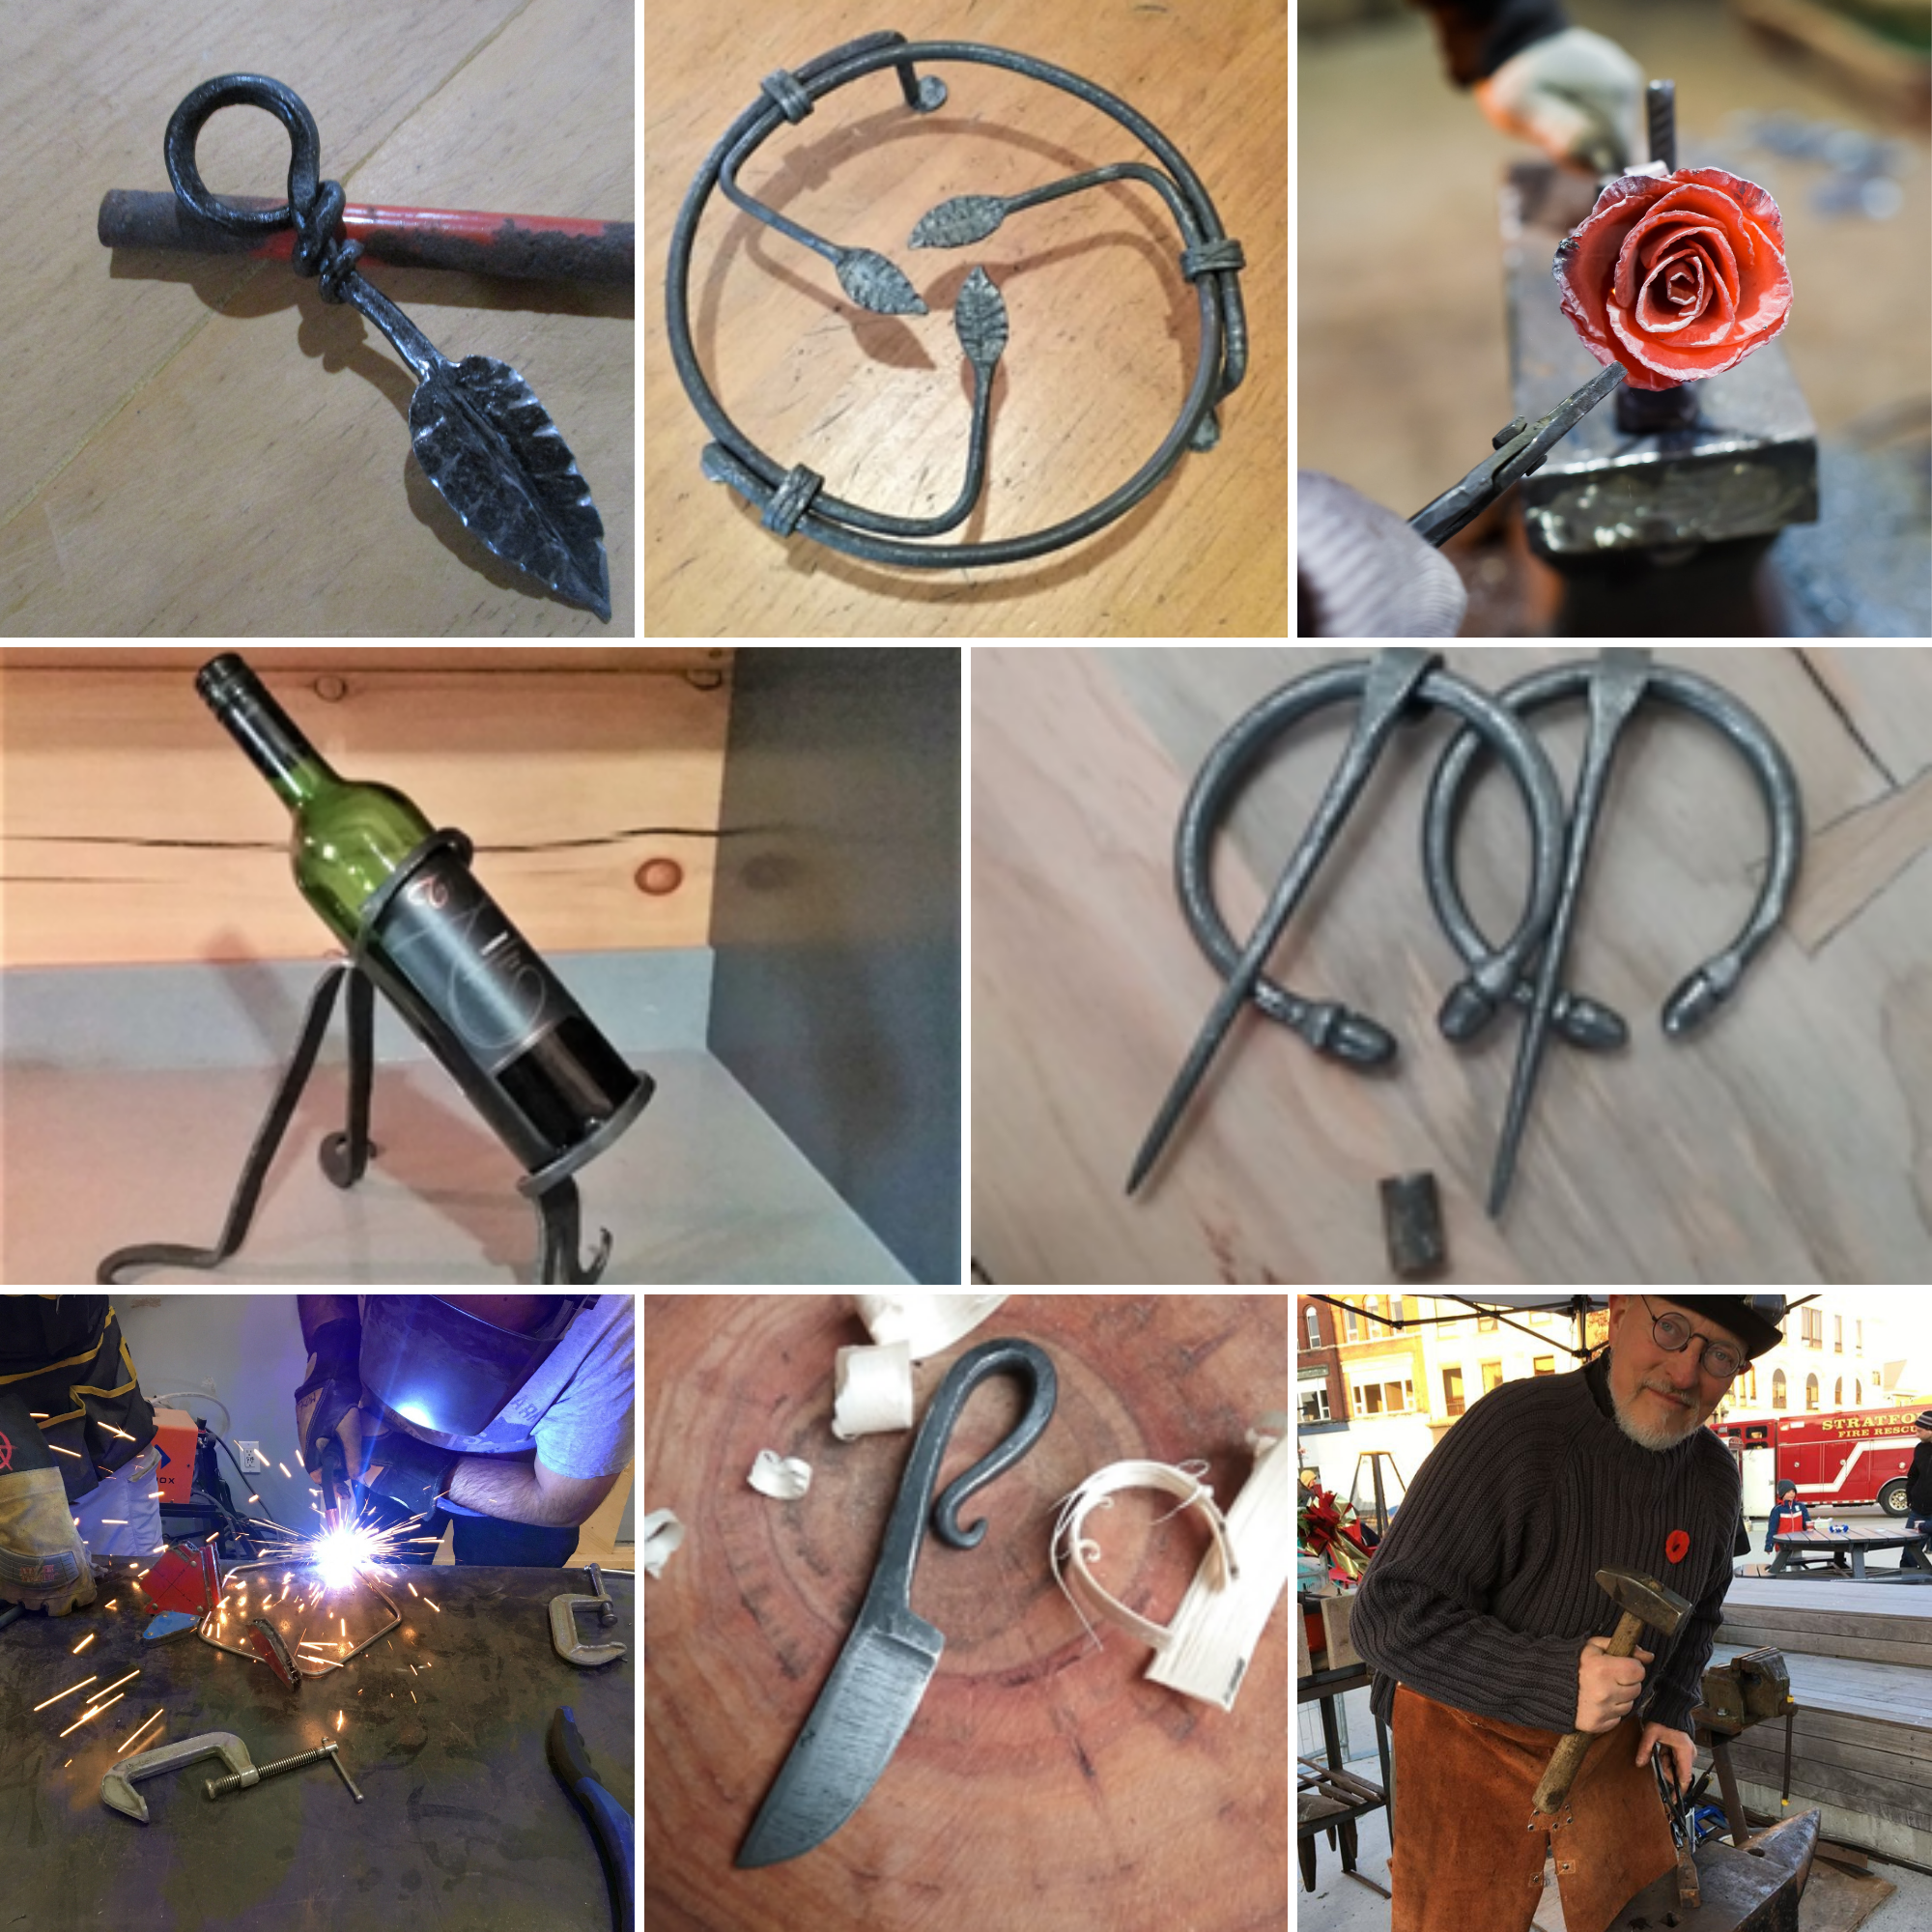 NewMakeIt Newmarket york region makers maker space welding blacksmith course workshops class